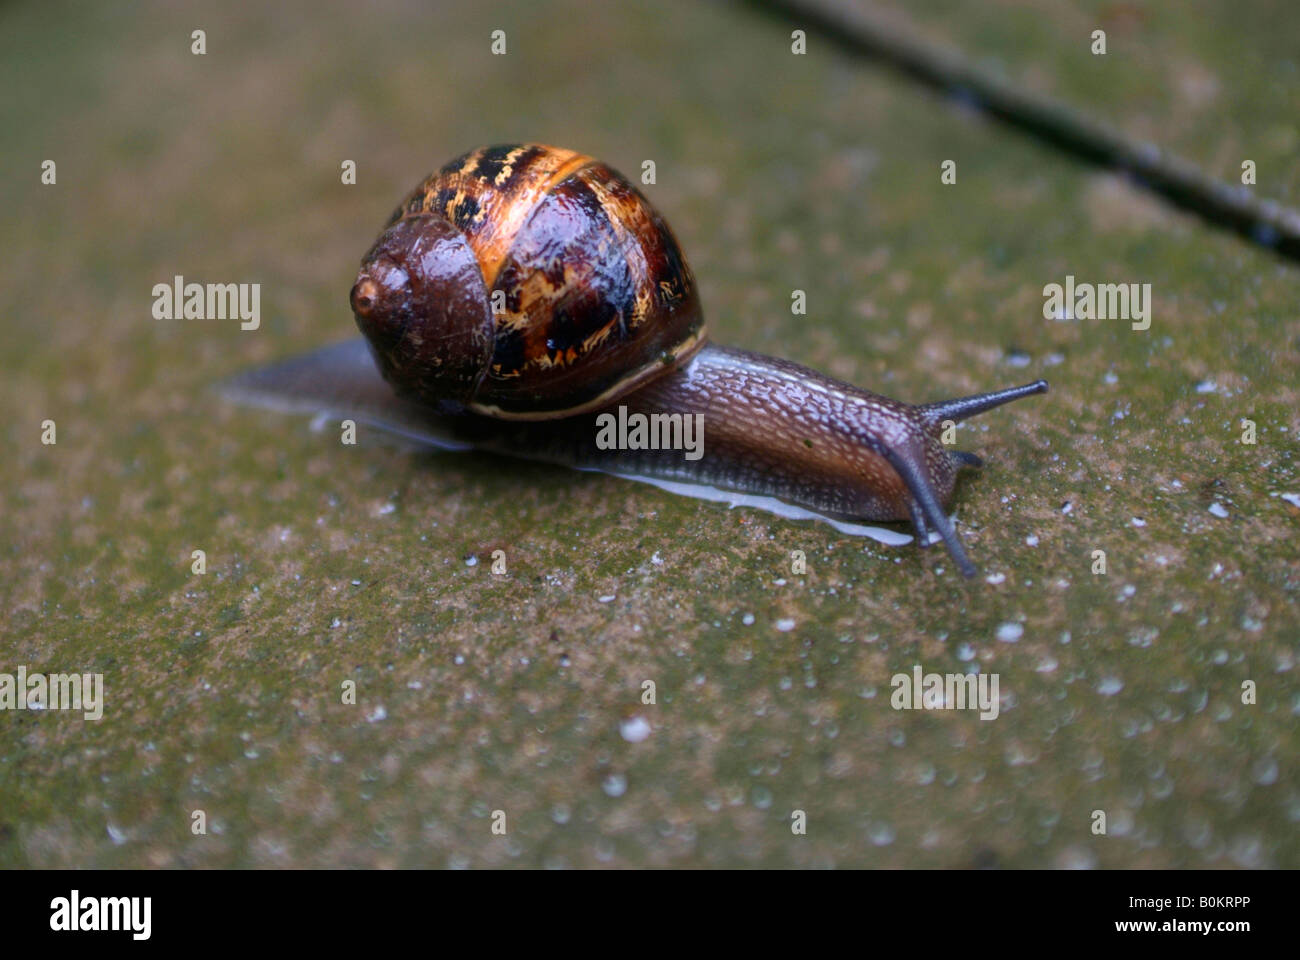 A snail on a wet floor in the rain Stock Photo